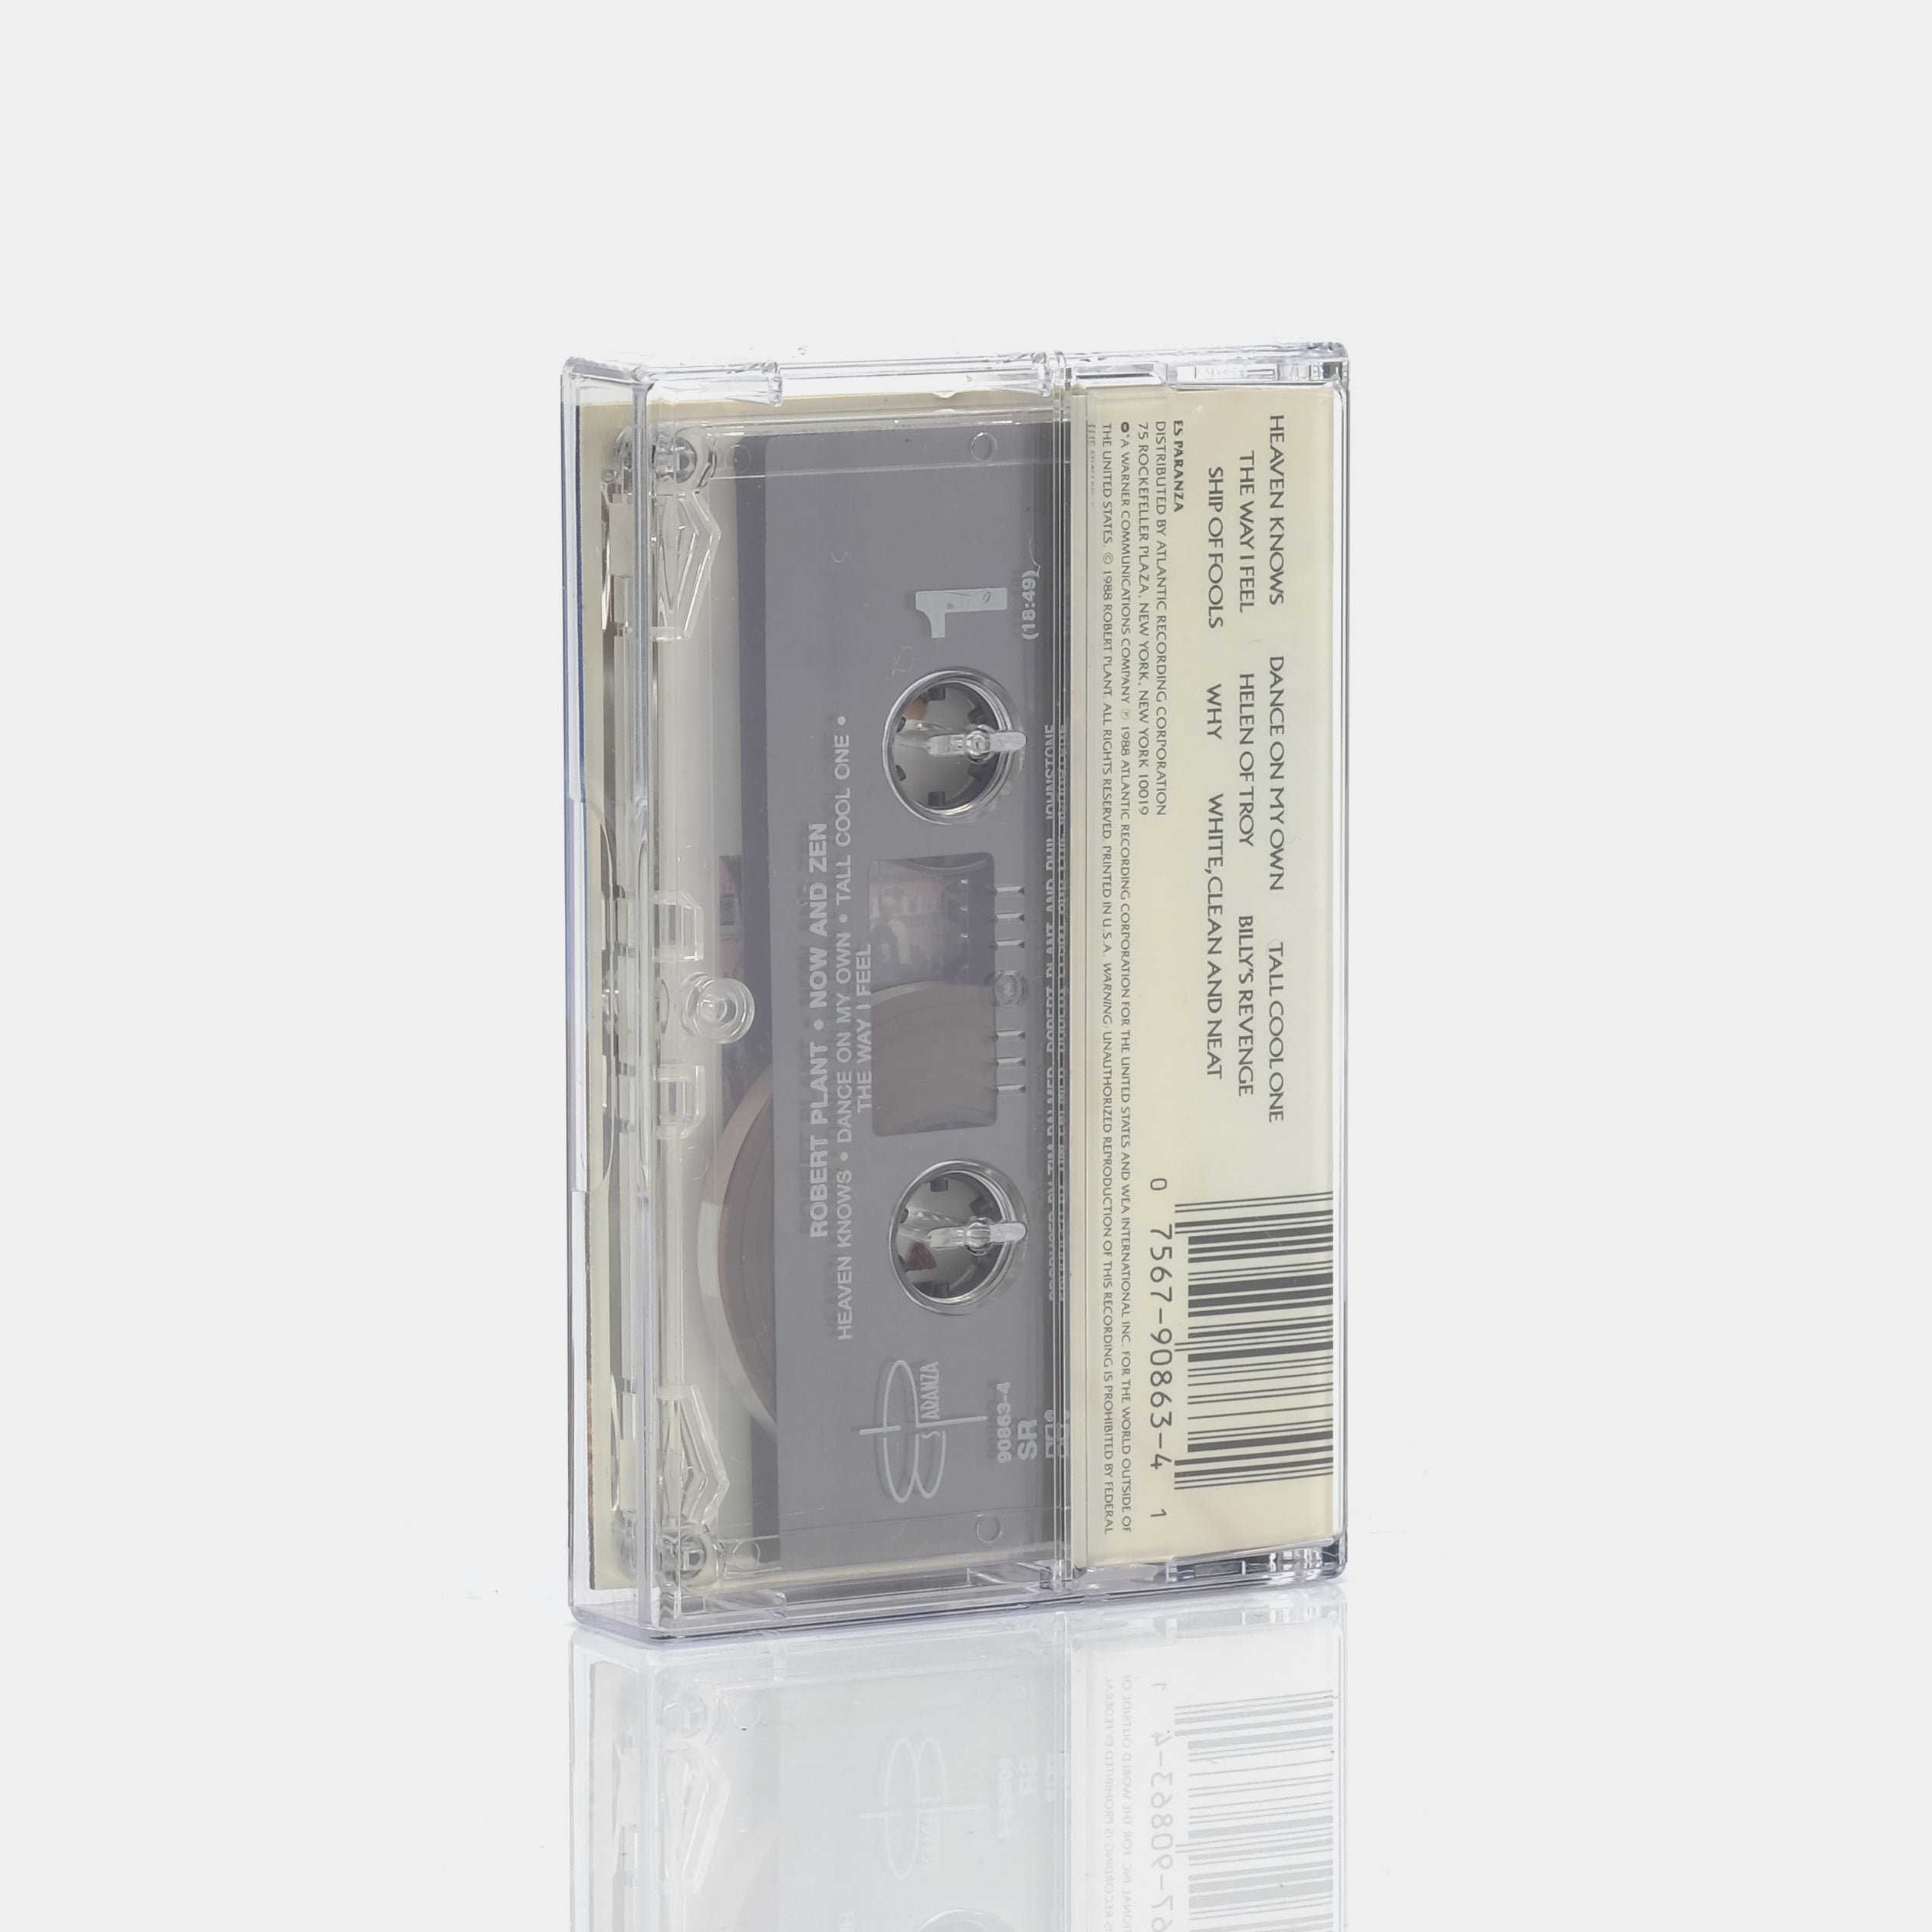 Robert Plant - Now And Zen Cassette Tape